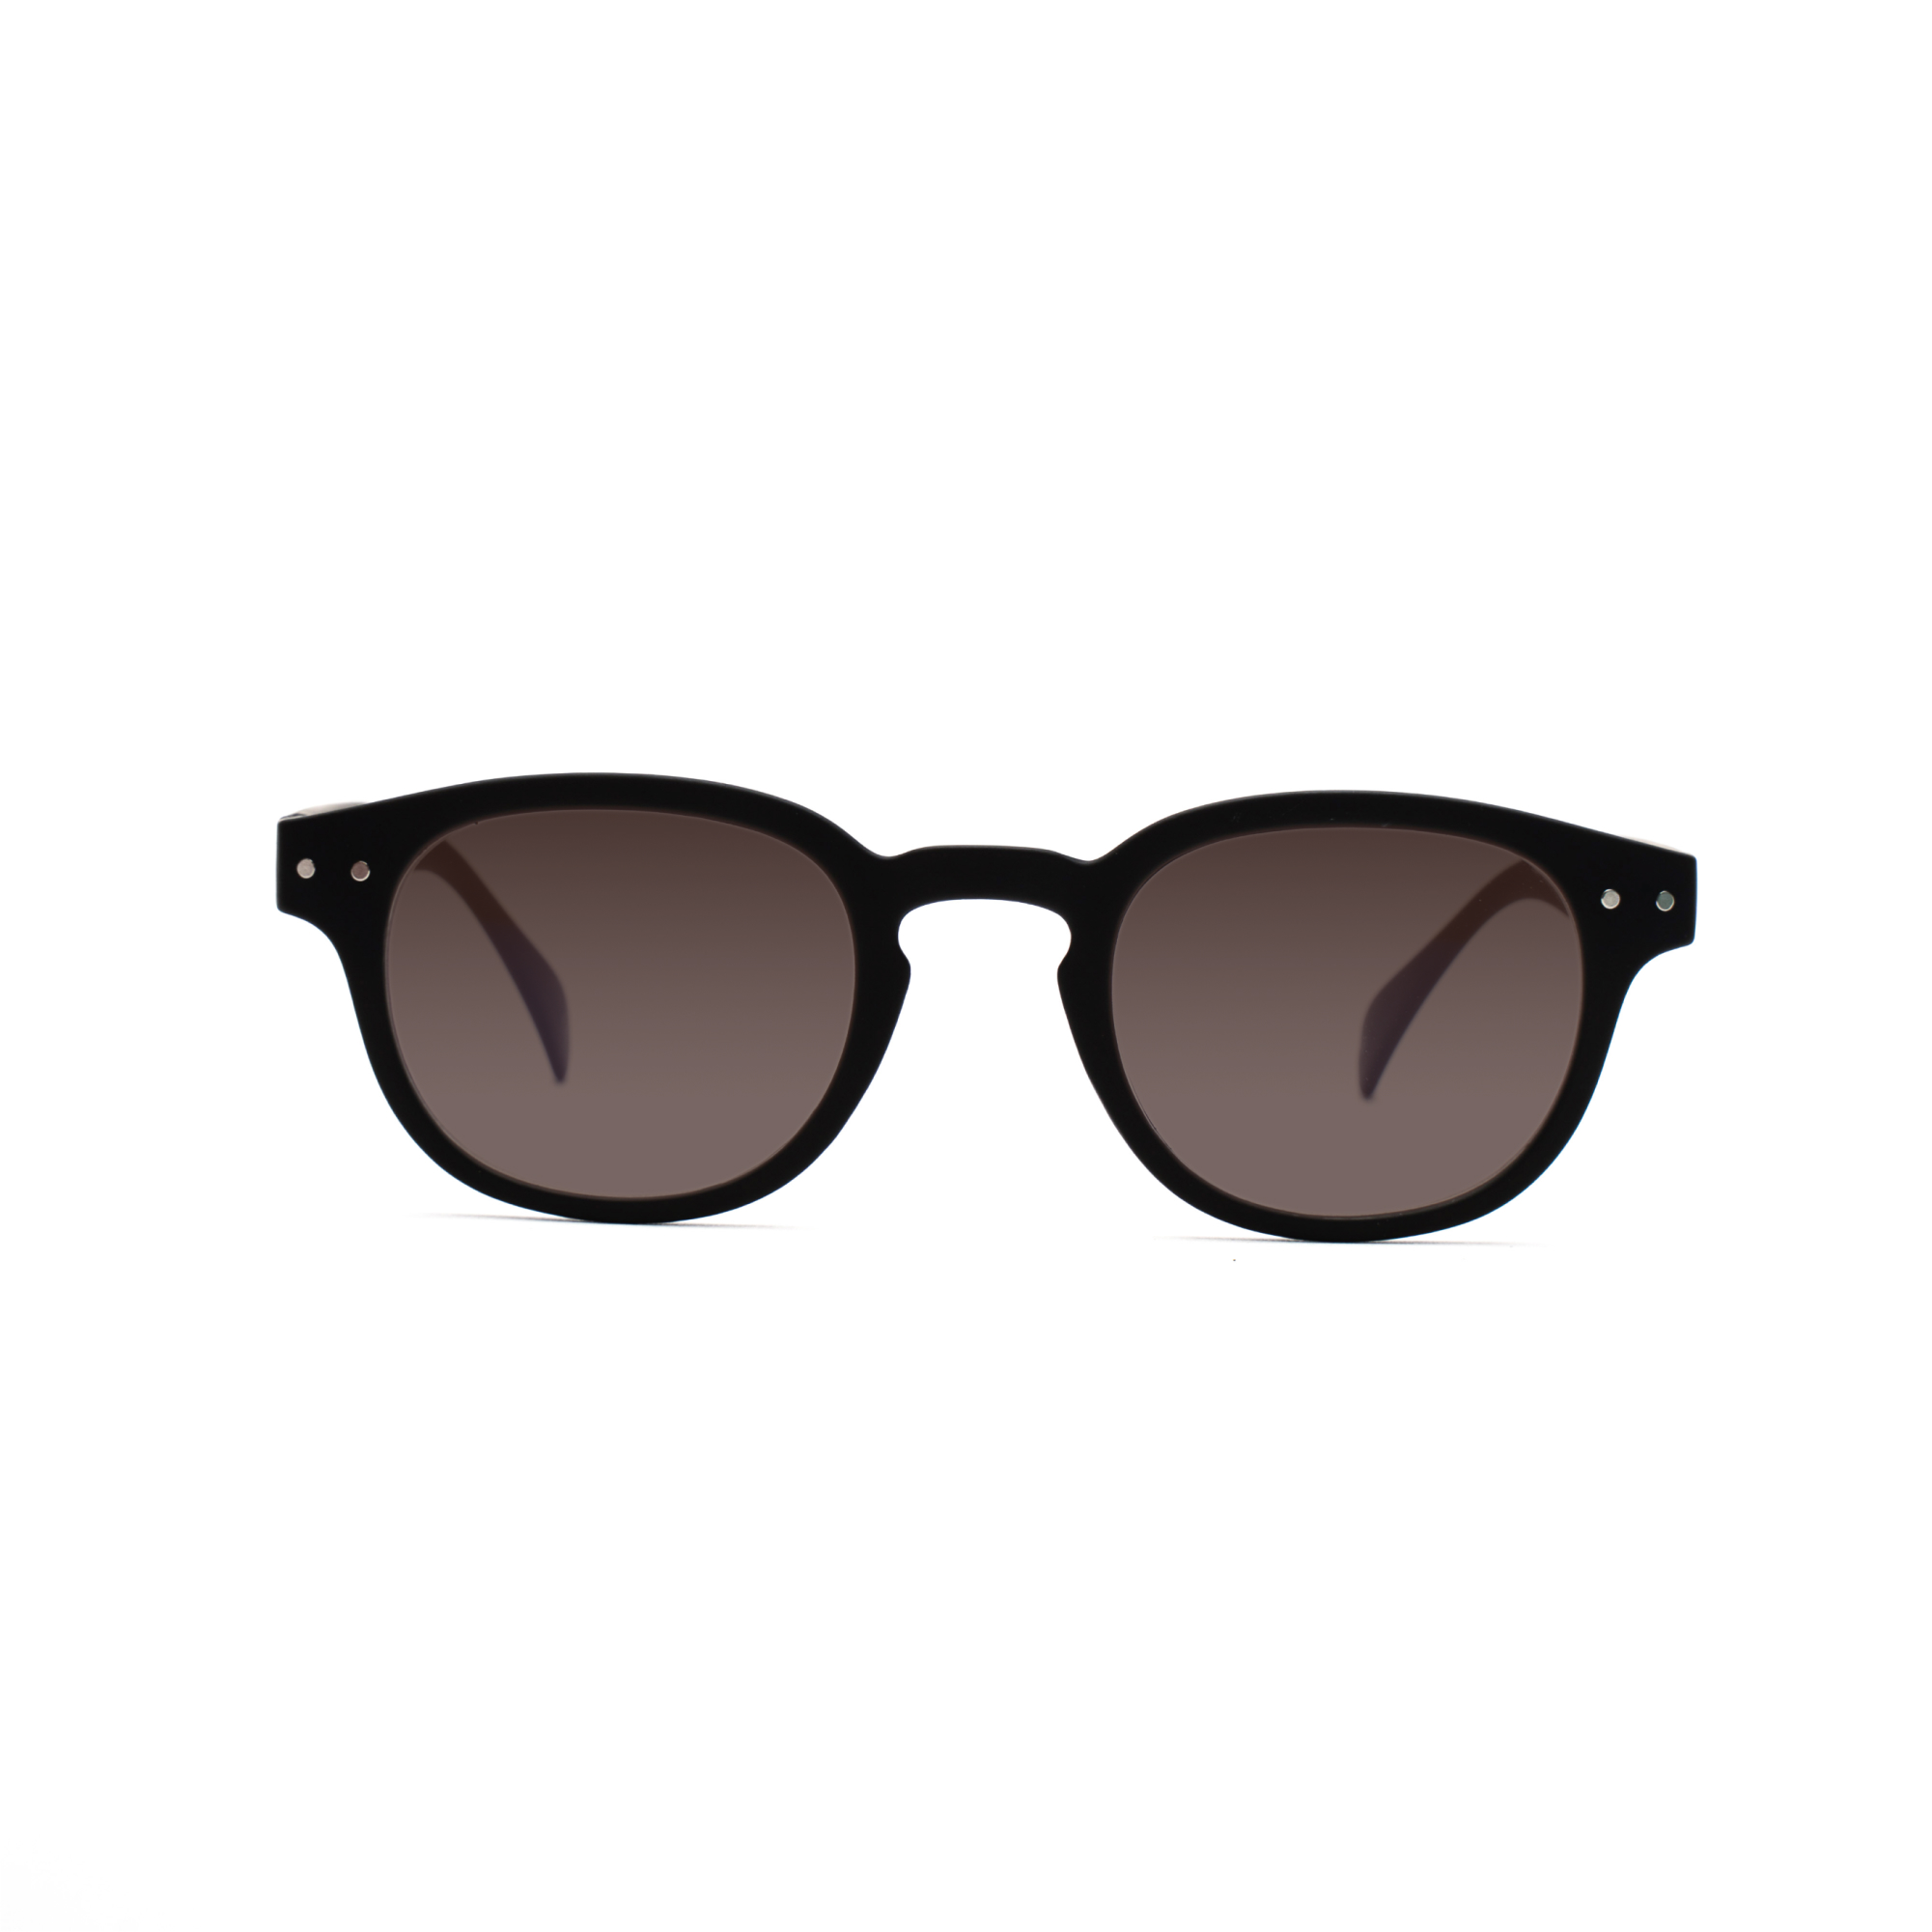 Women's transition glasses – Anton GEN 8 w - Black